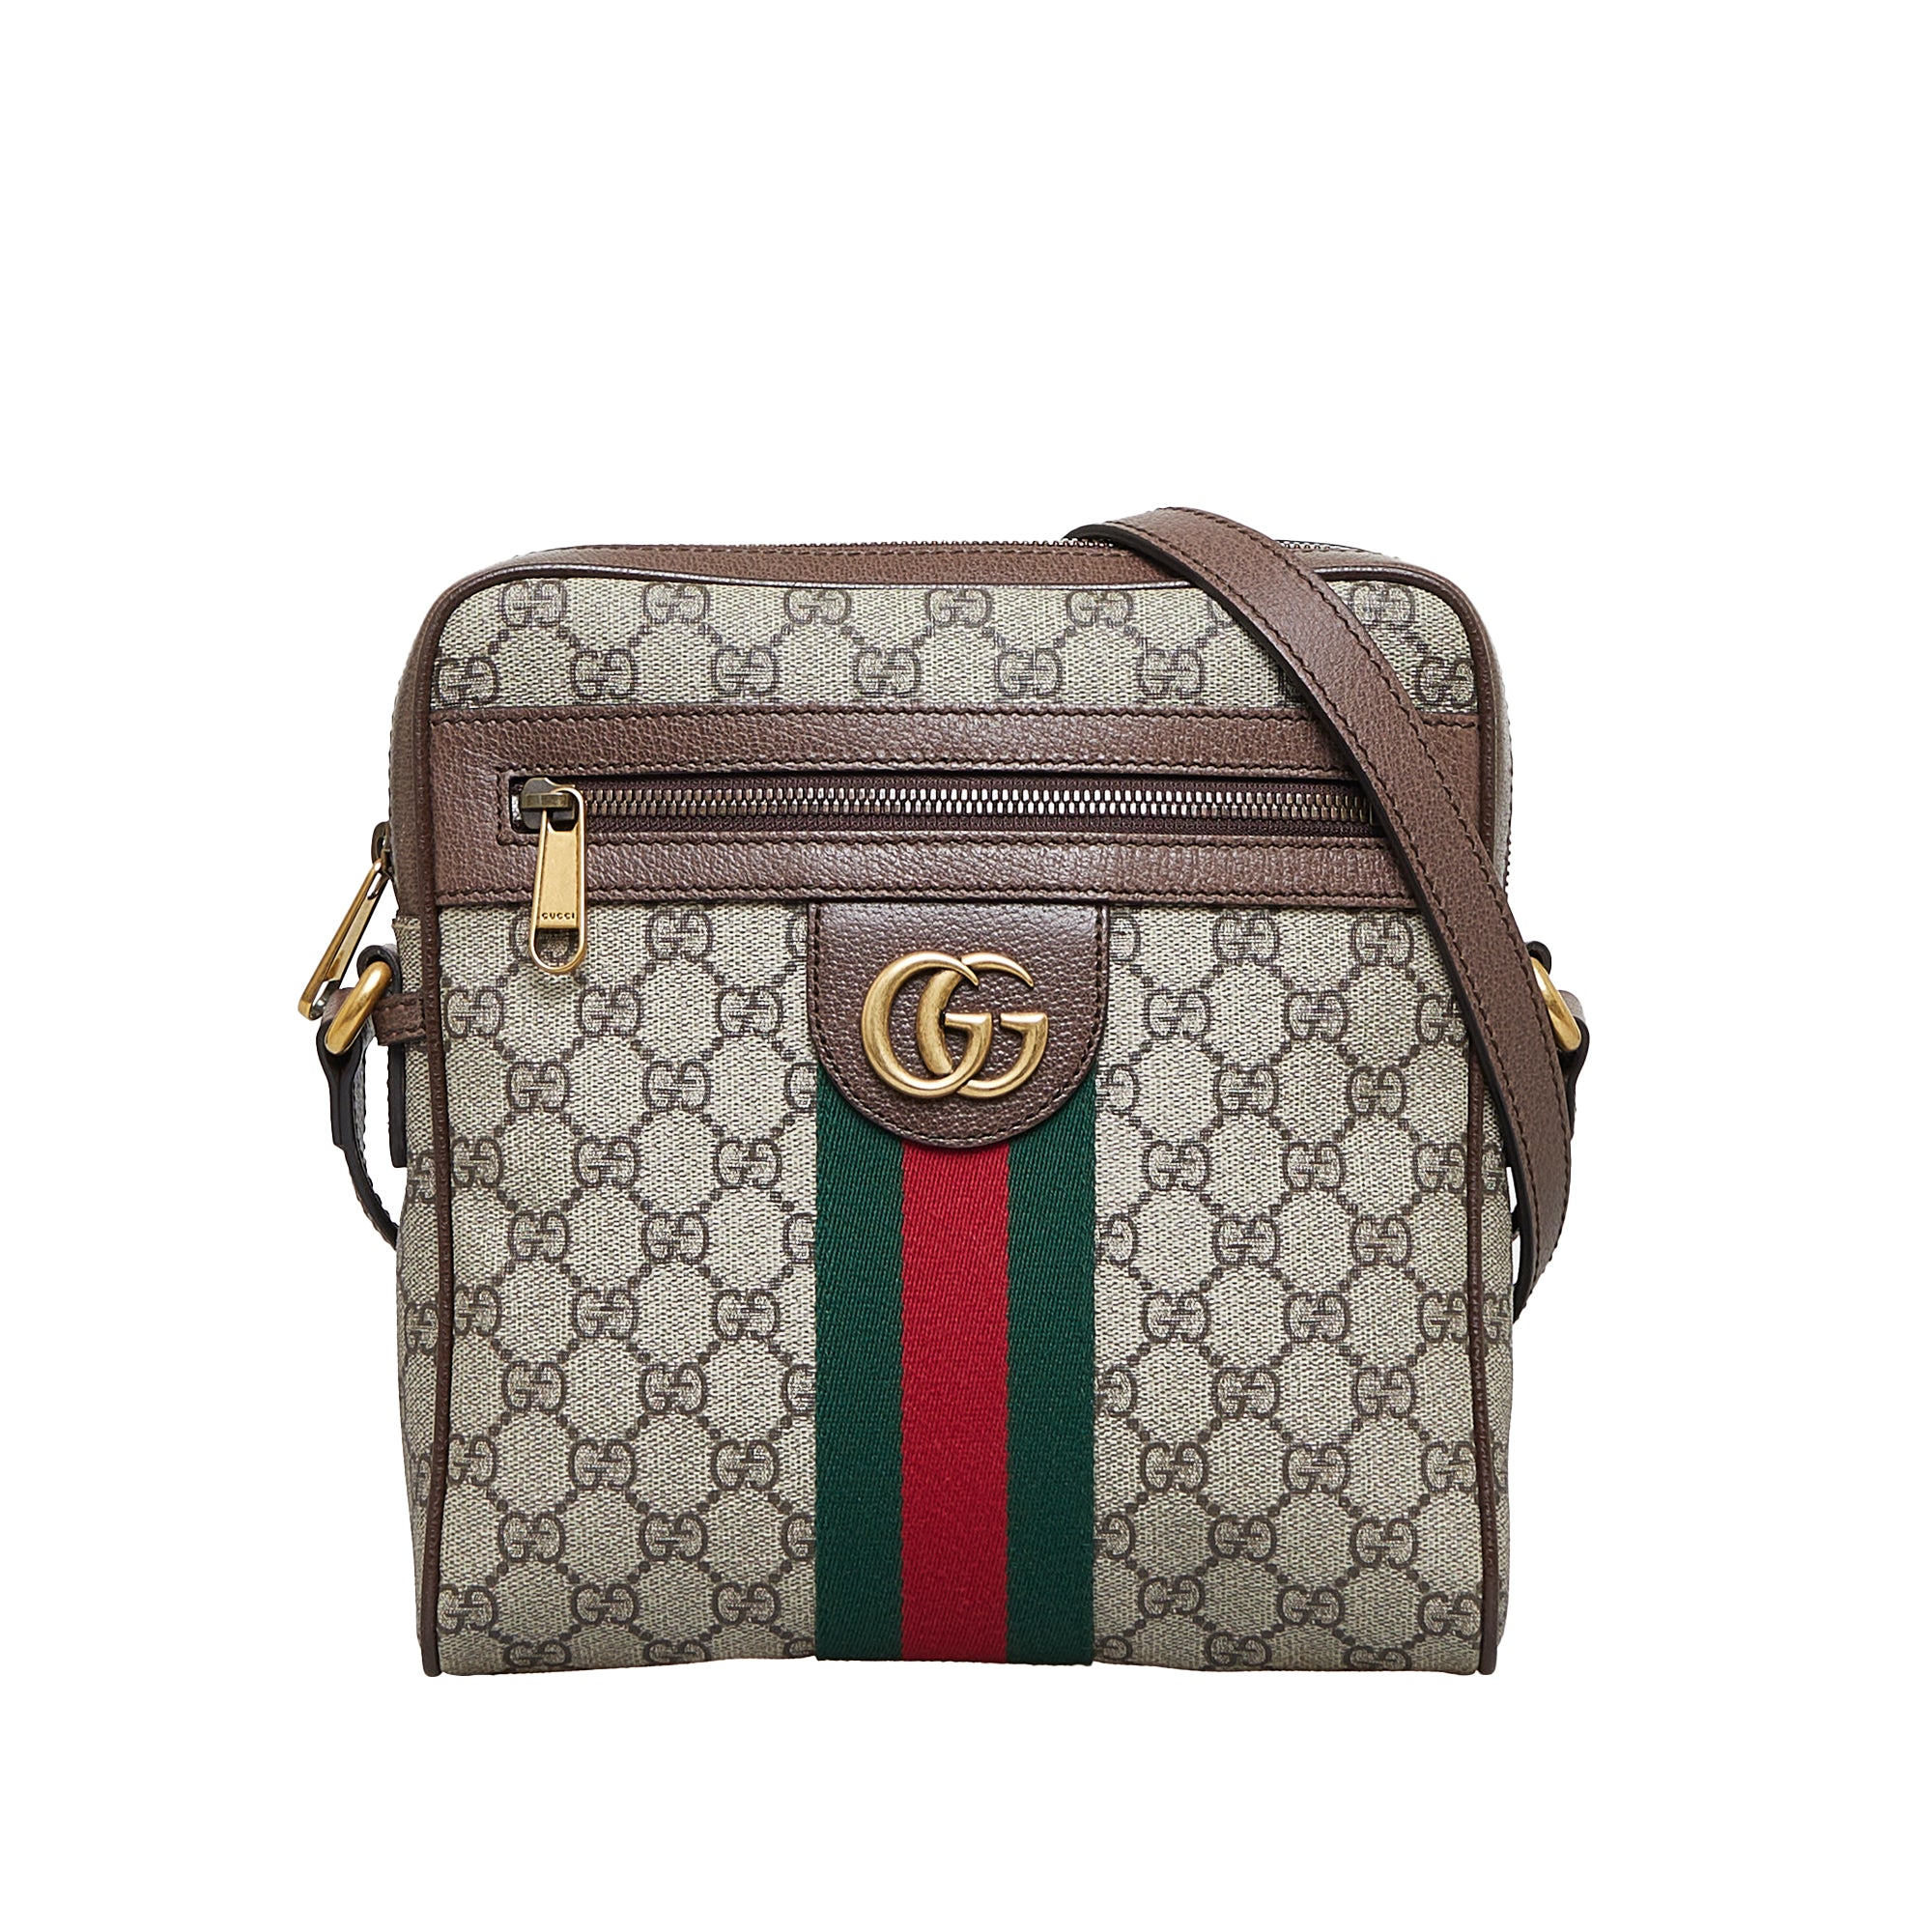 Gucci Gucci GG Supreme Coated Canvas Mini Clutch Bag